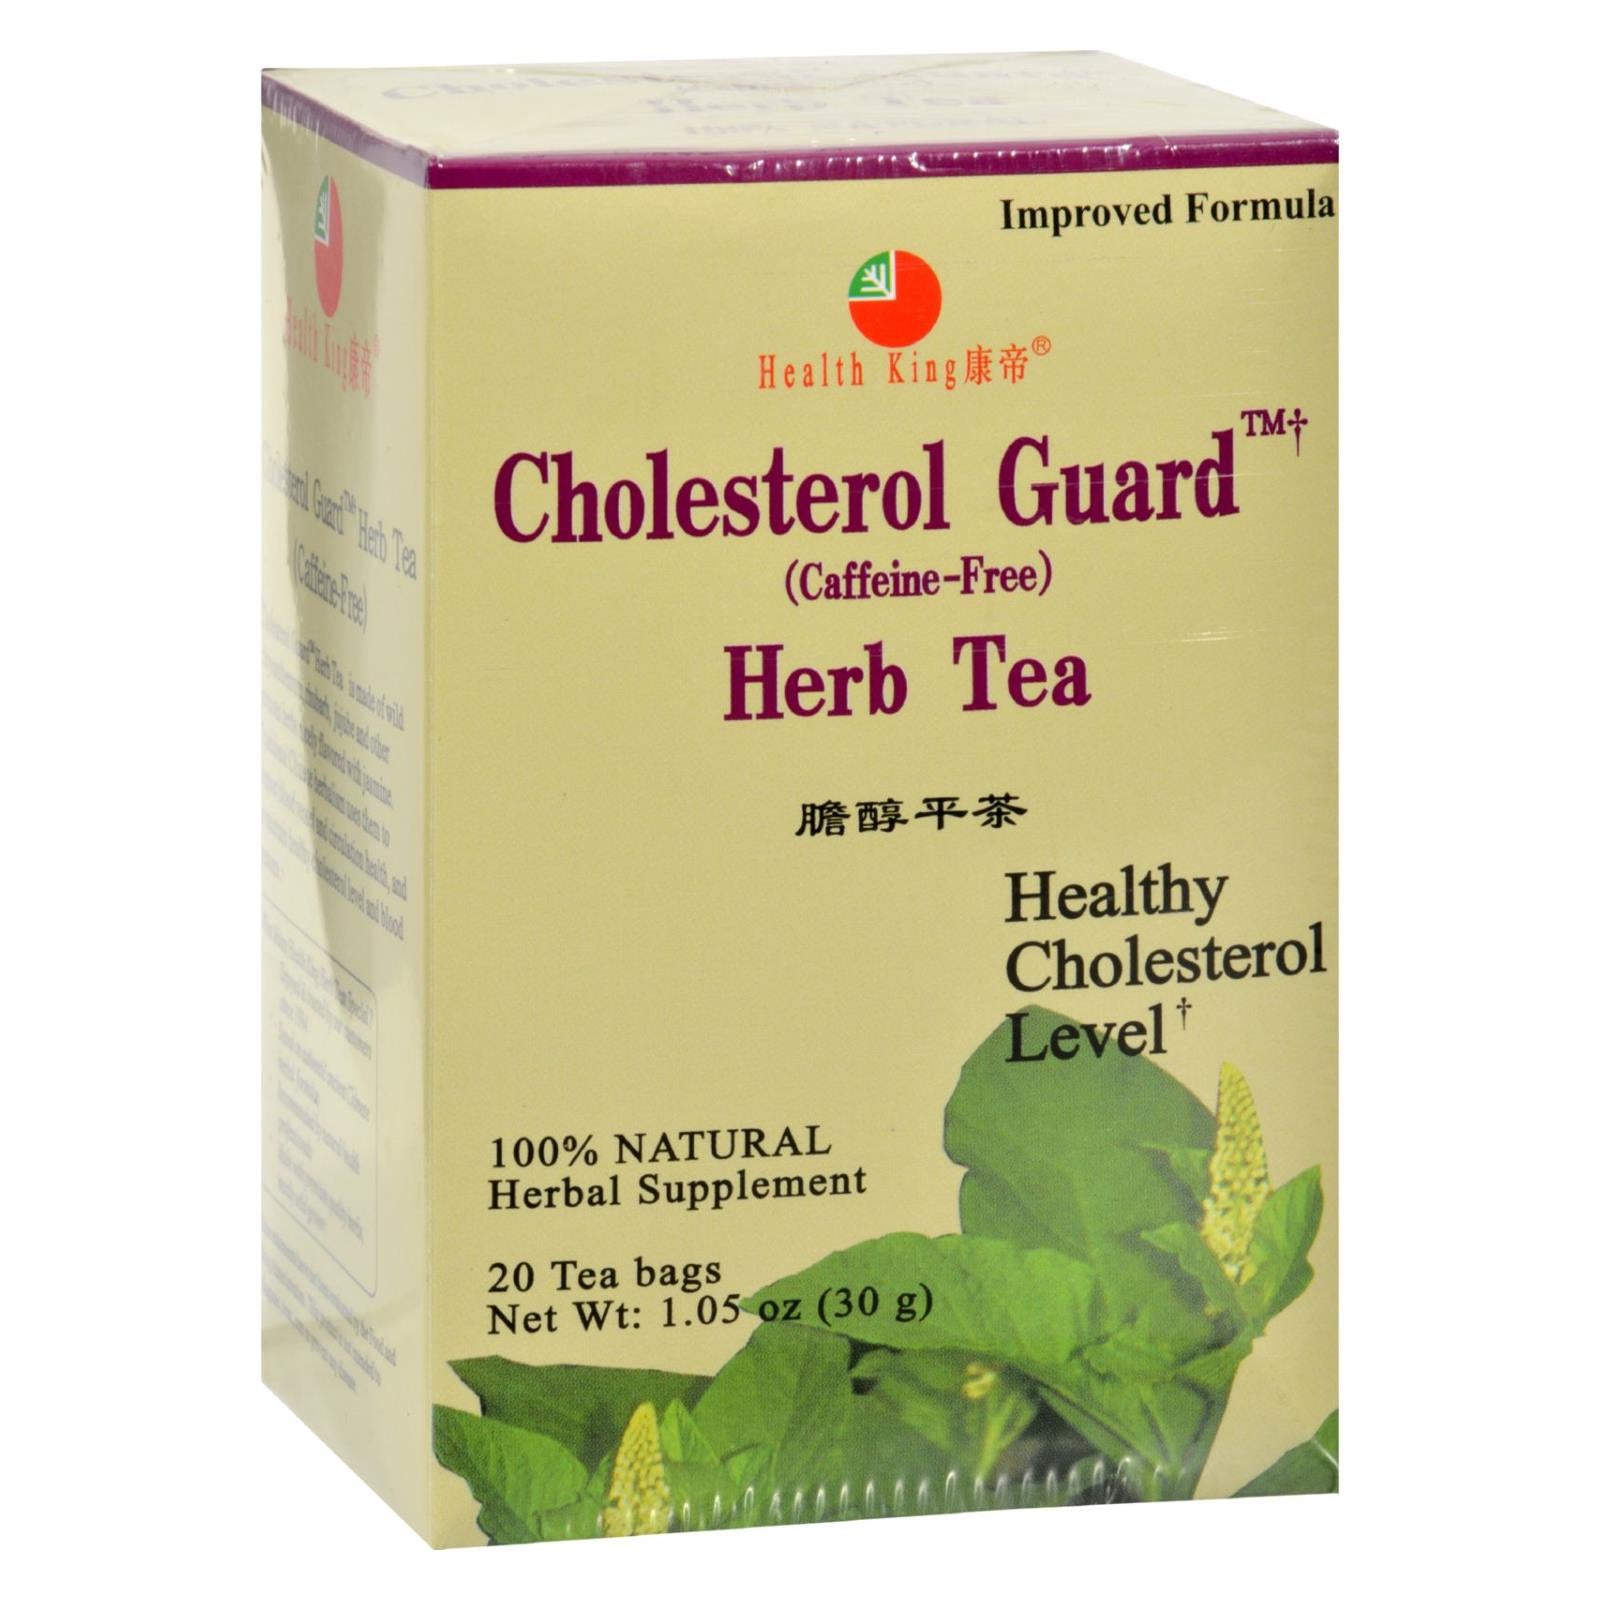 Health King Cholesterol Guard Tea